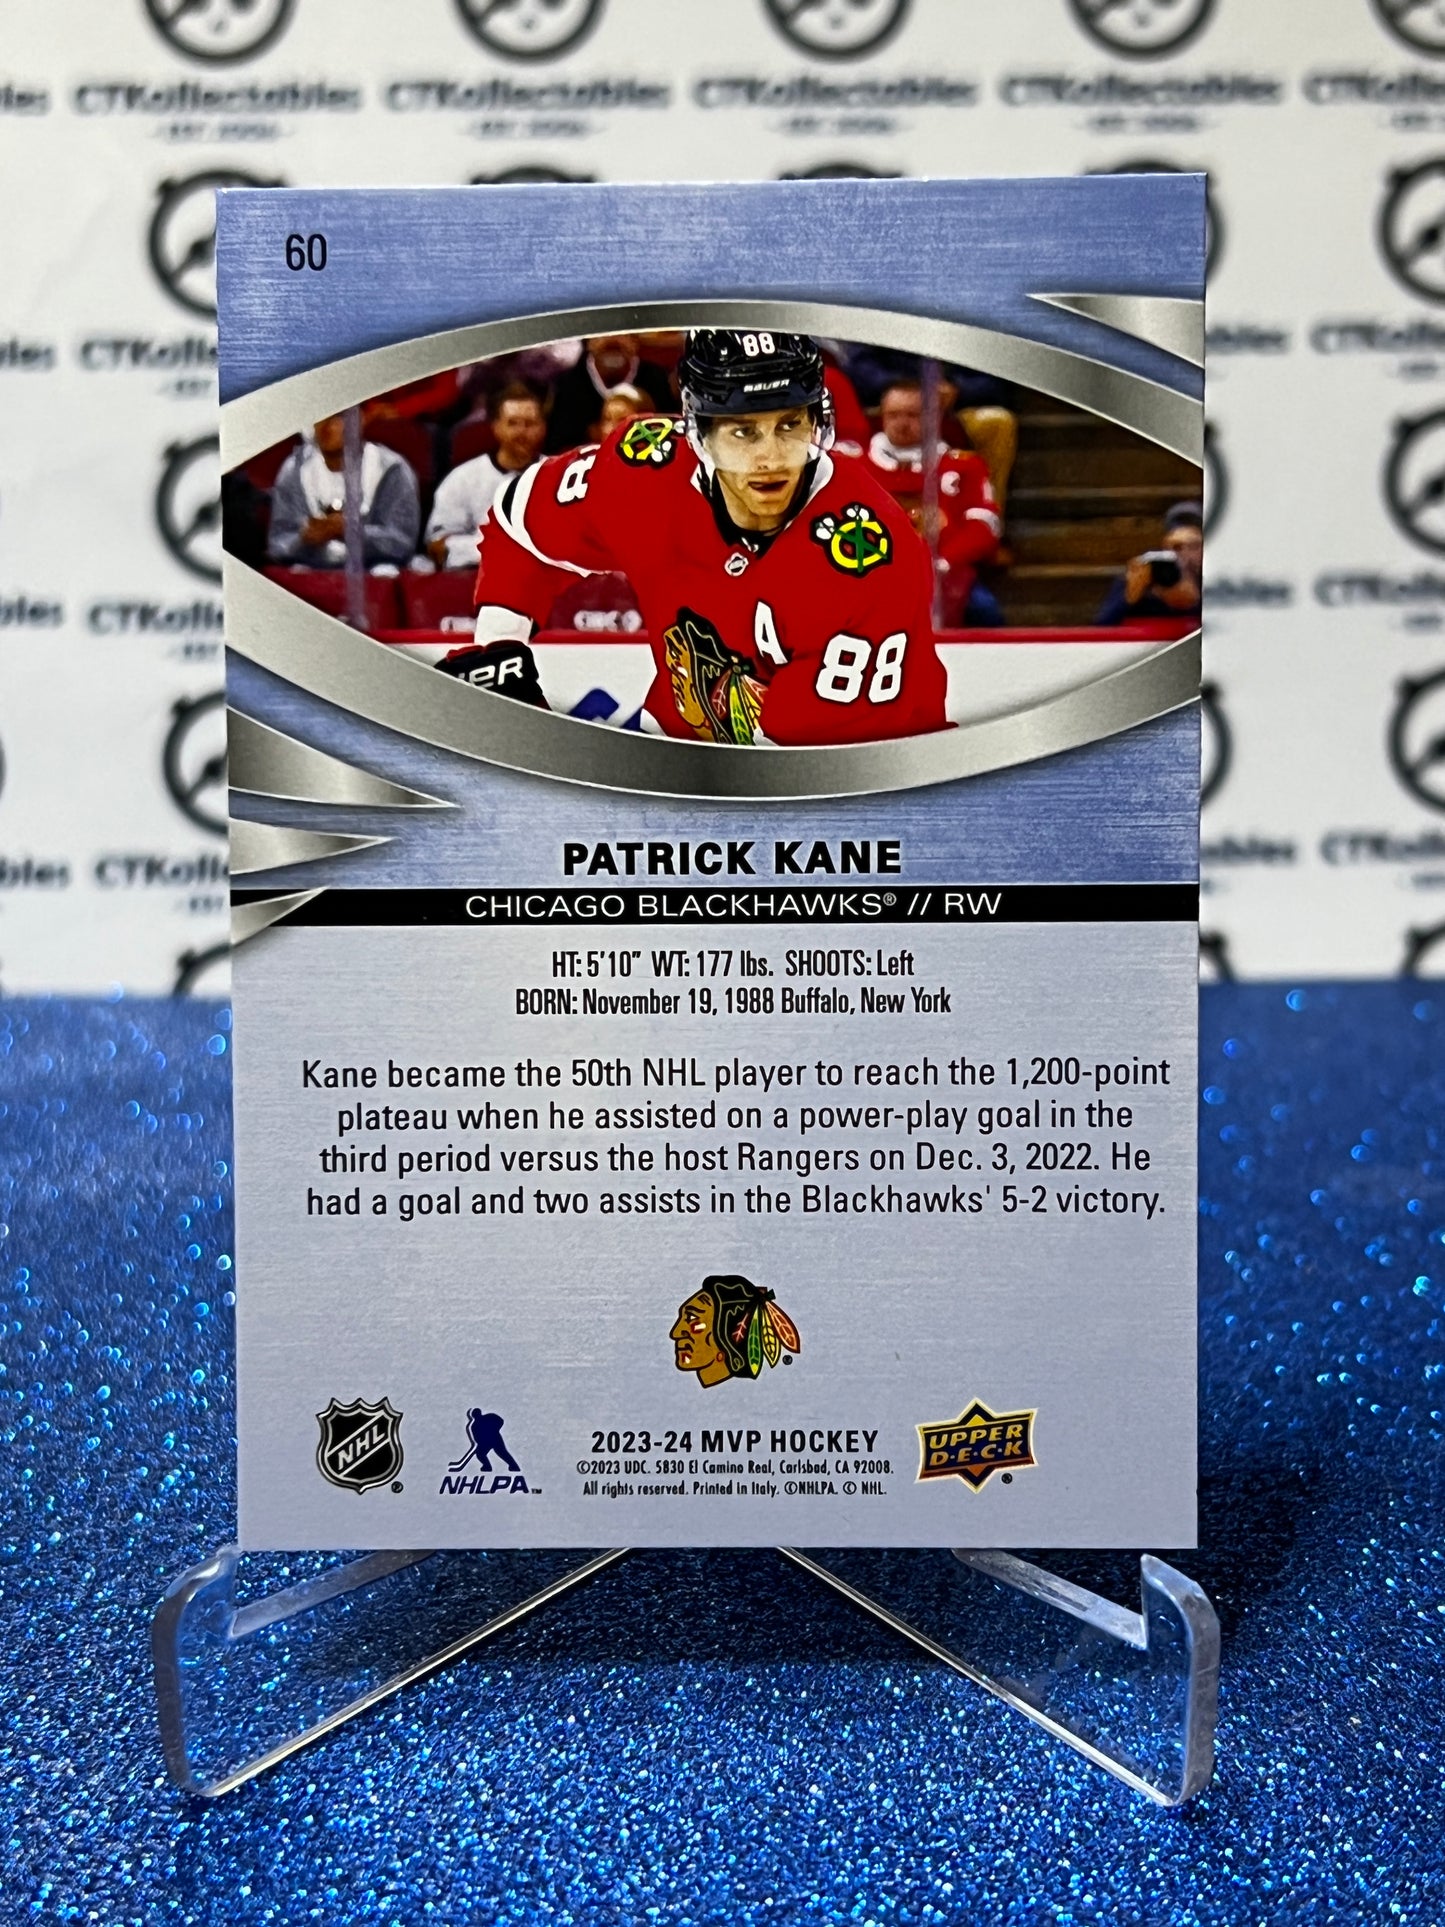 2023-24 UPPER DECK MVP PATRICK KANE # 60 CHICAGO BLACKHAWKS NHL HOCKEY TRADING CARD